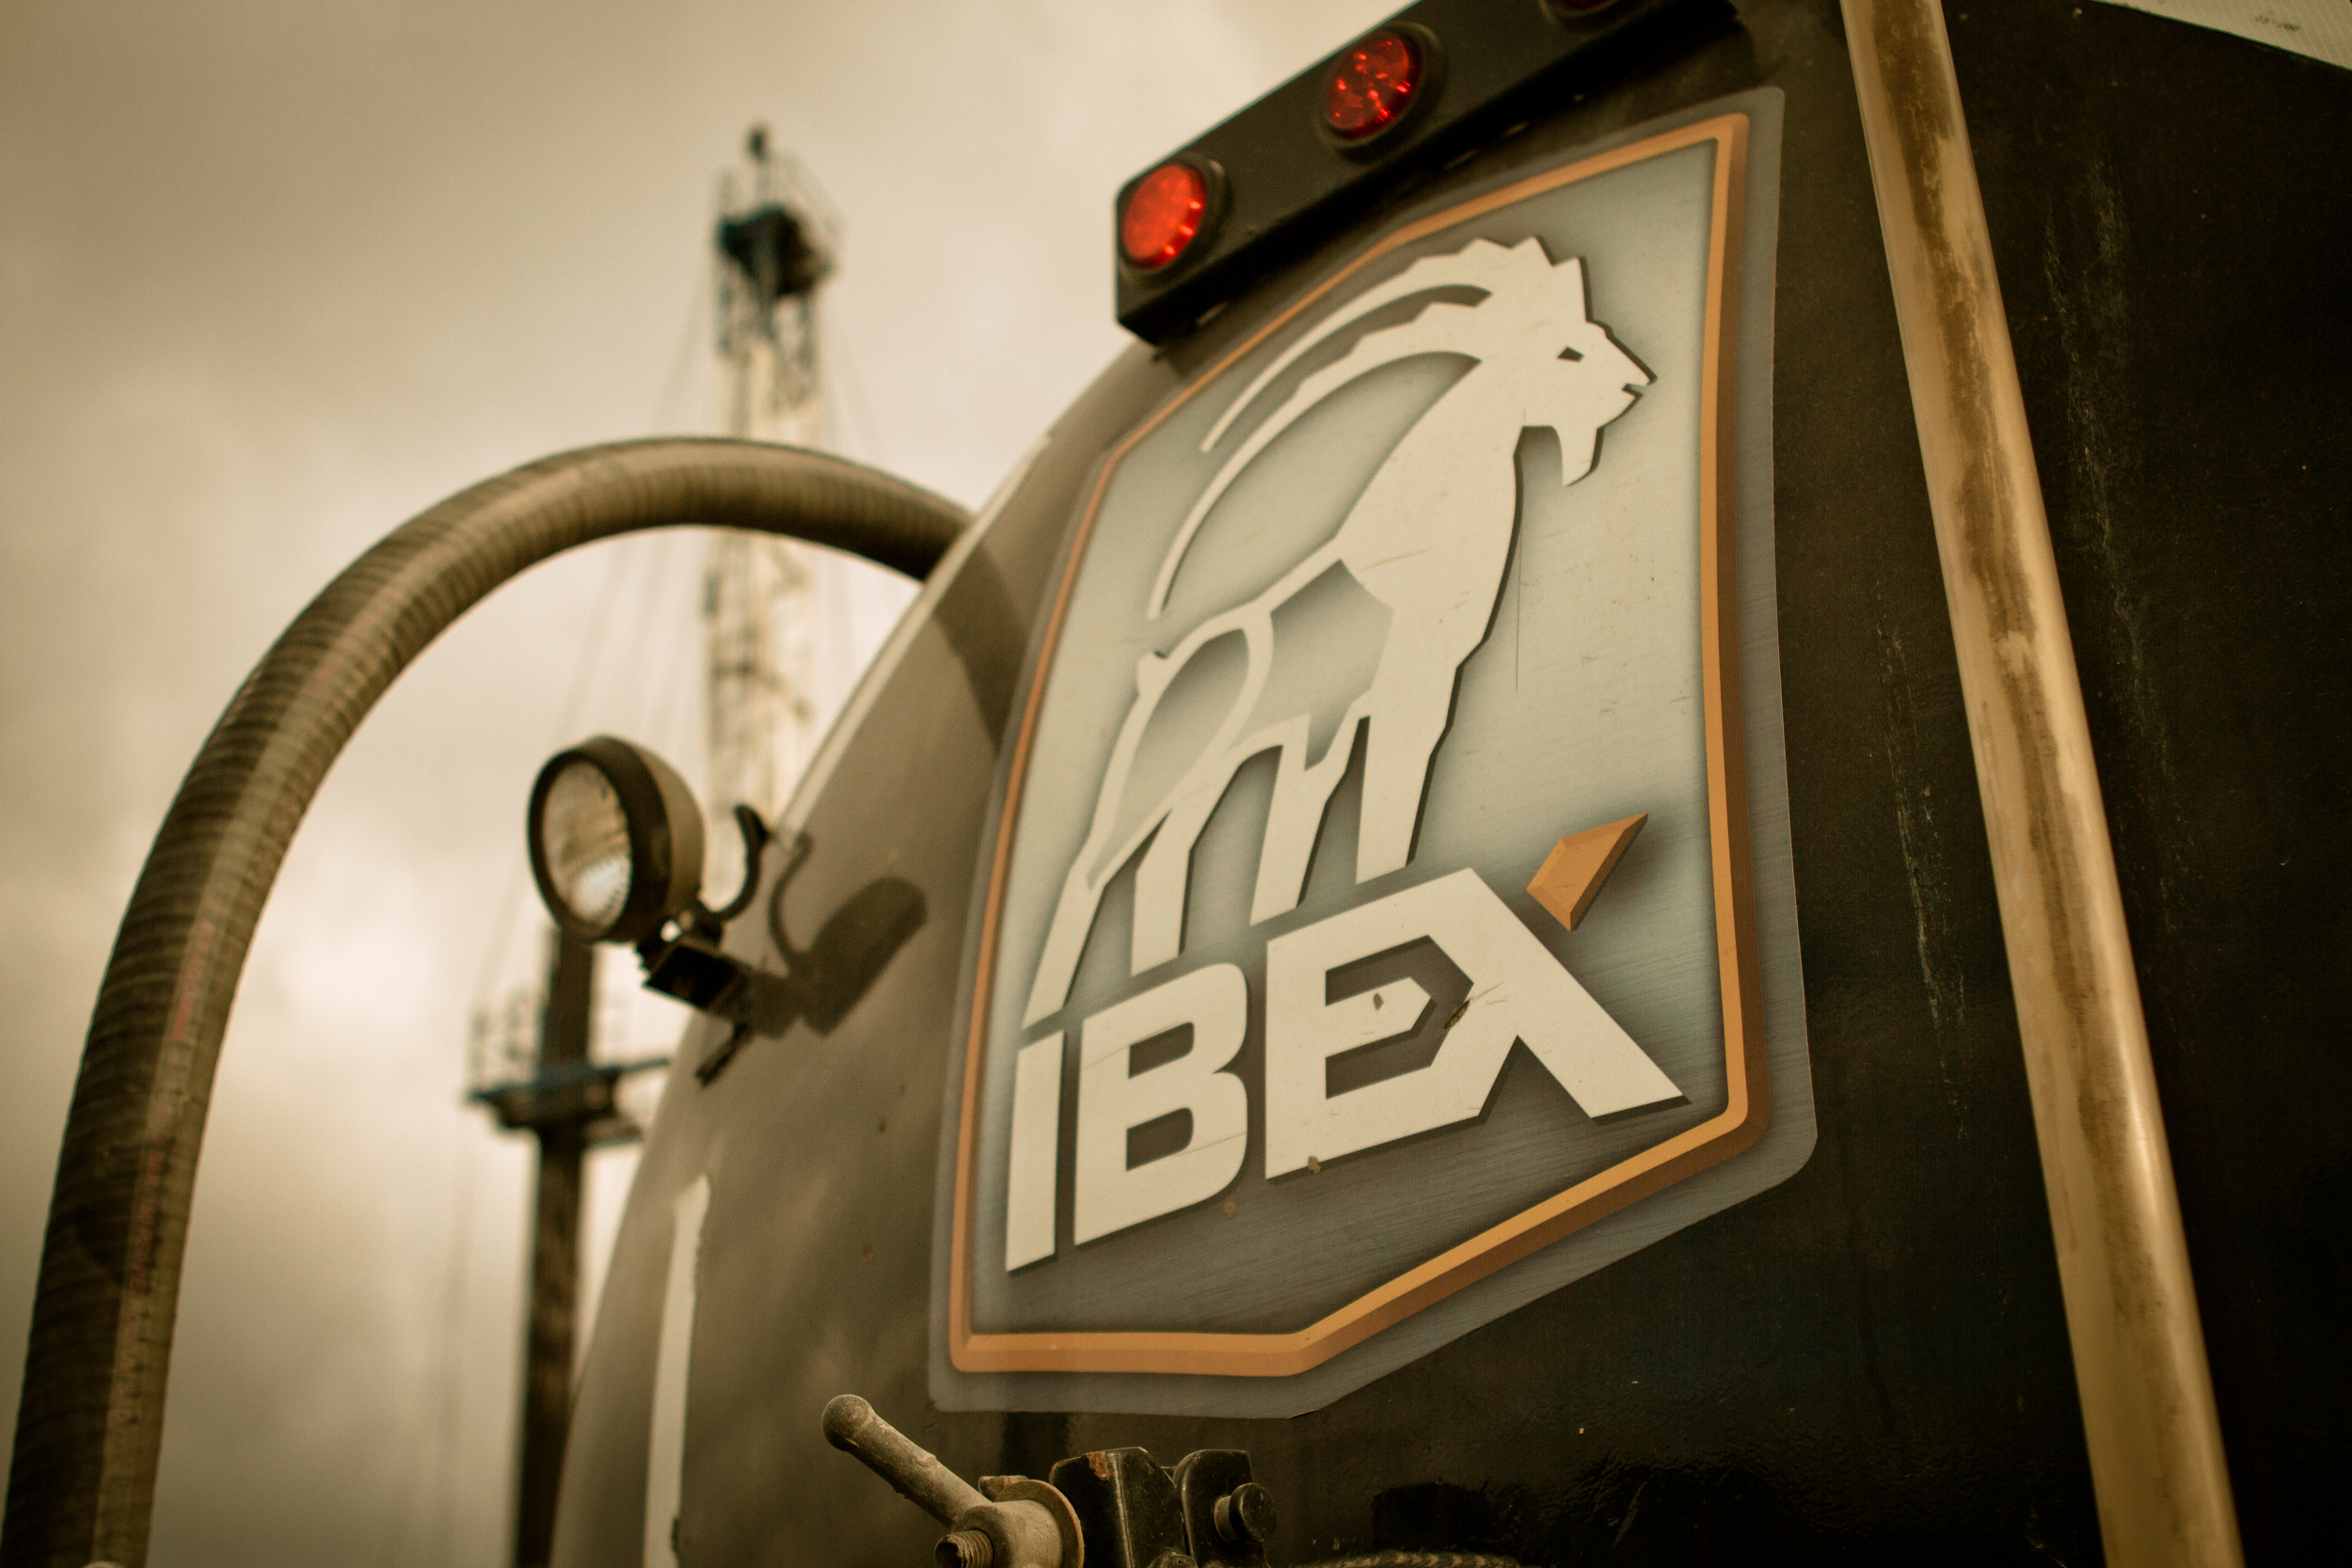 Ibex tank - back logo